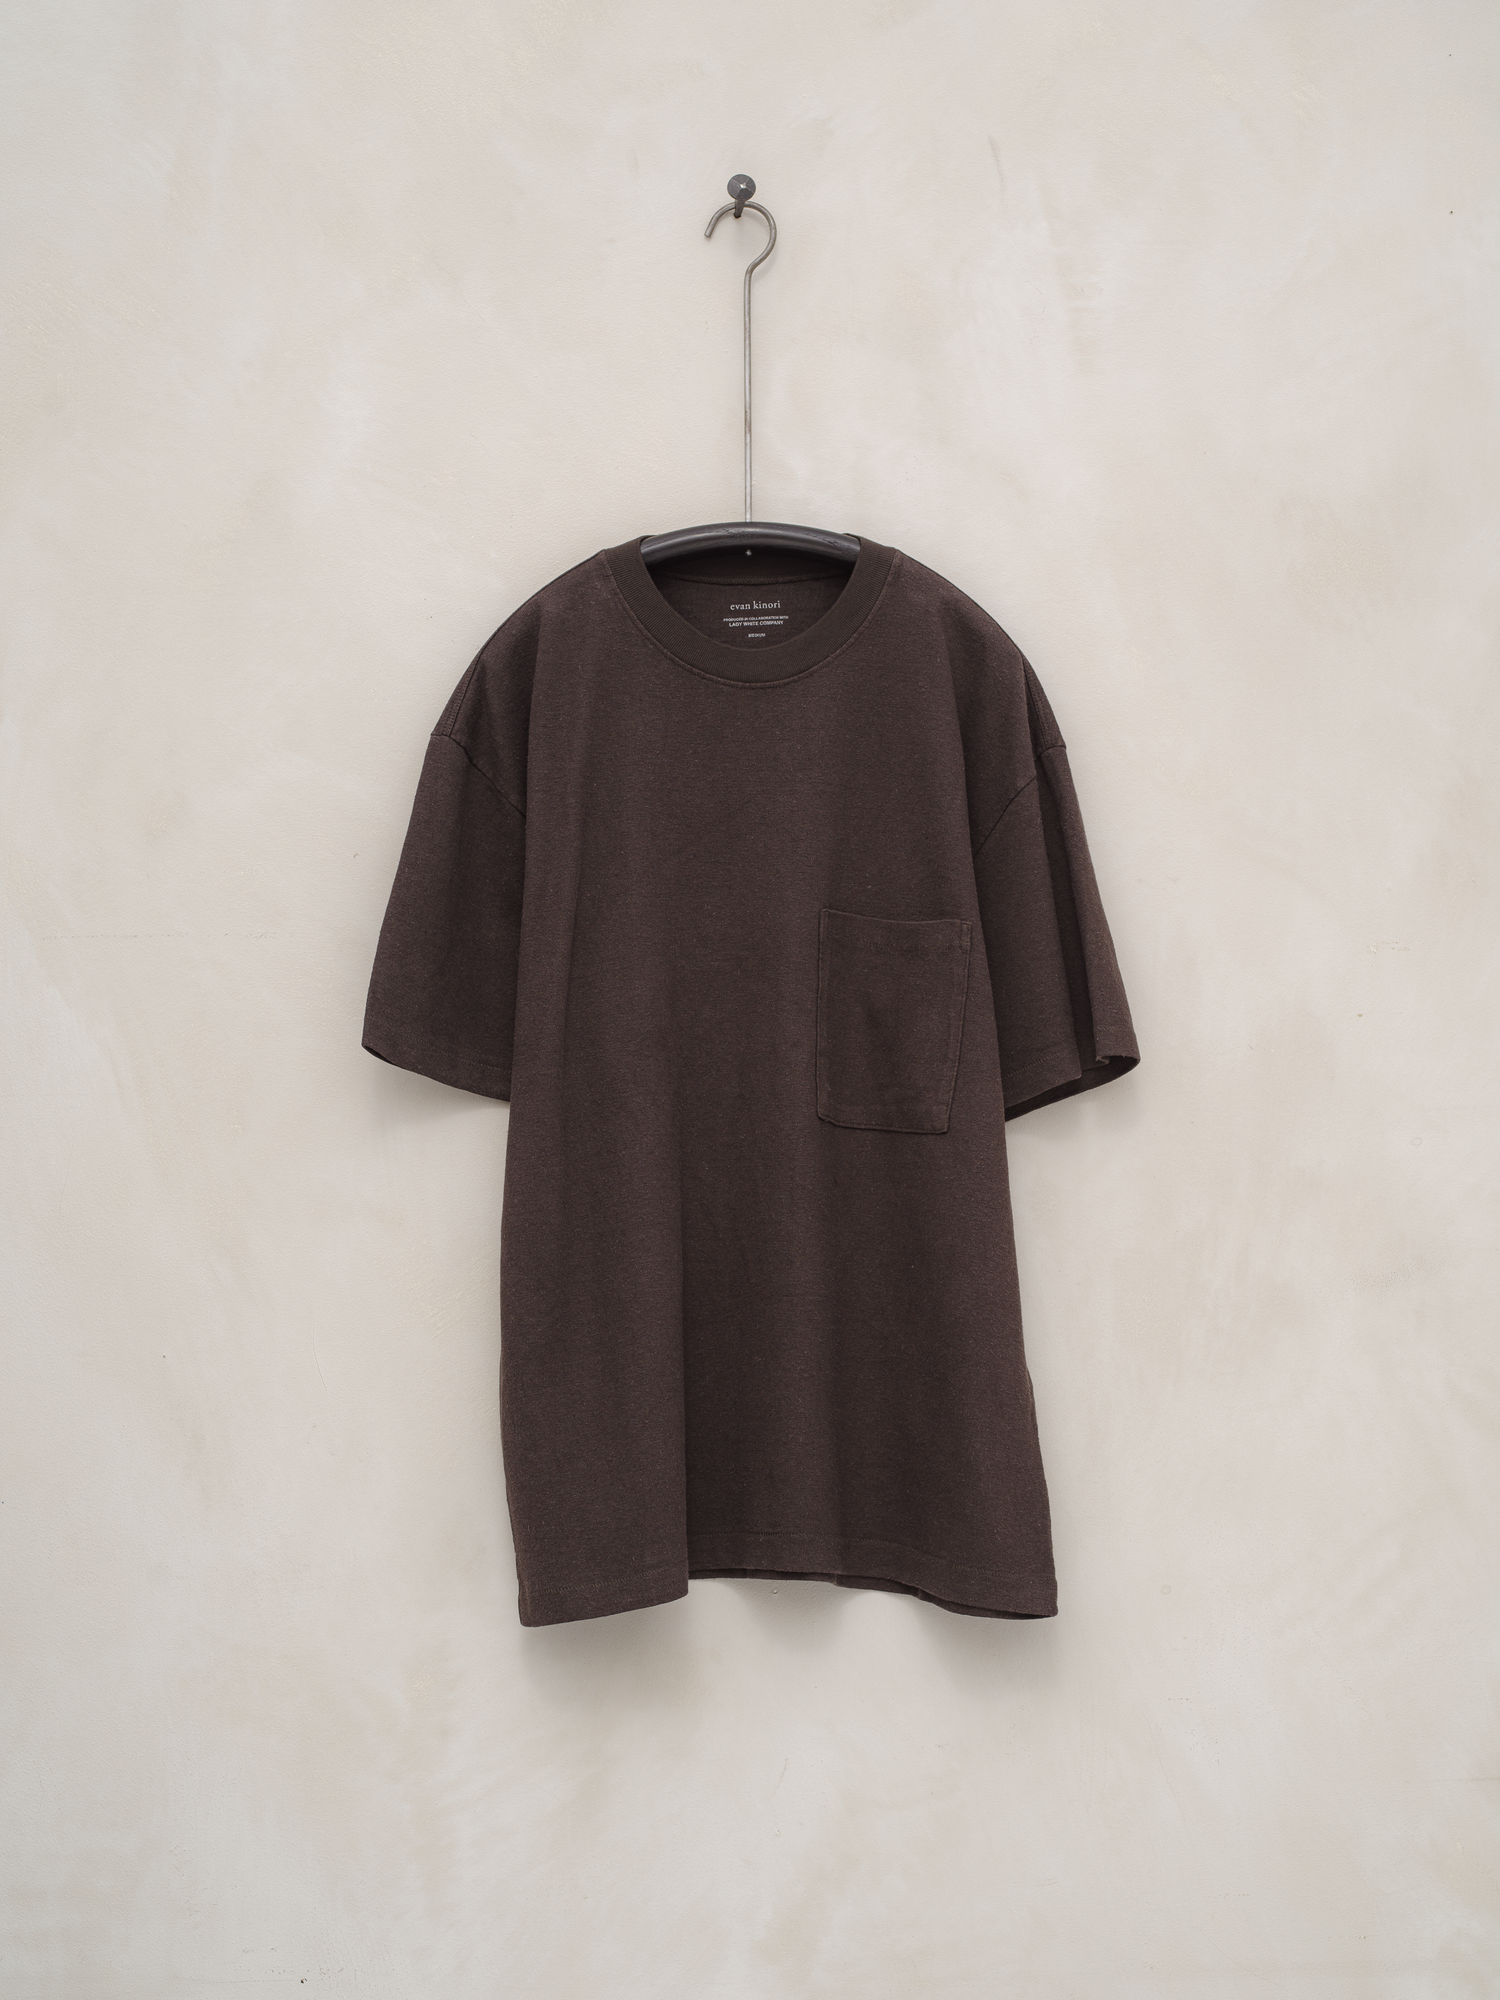 Pocket Tee - Hemp/Organic Cotton Jersey - Dark Brown — evan kinori